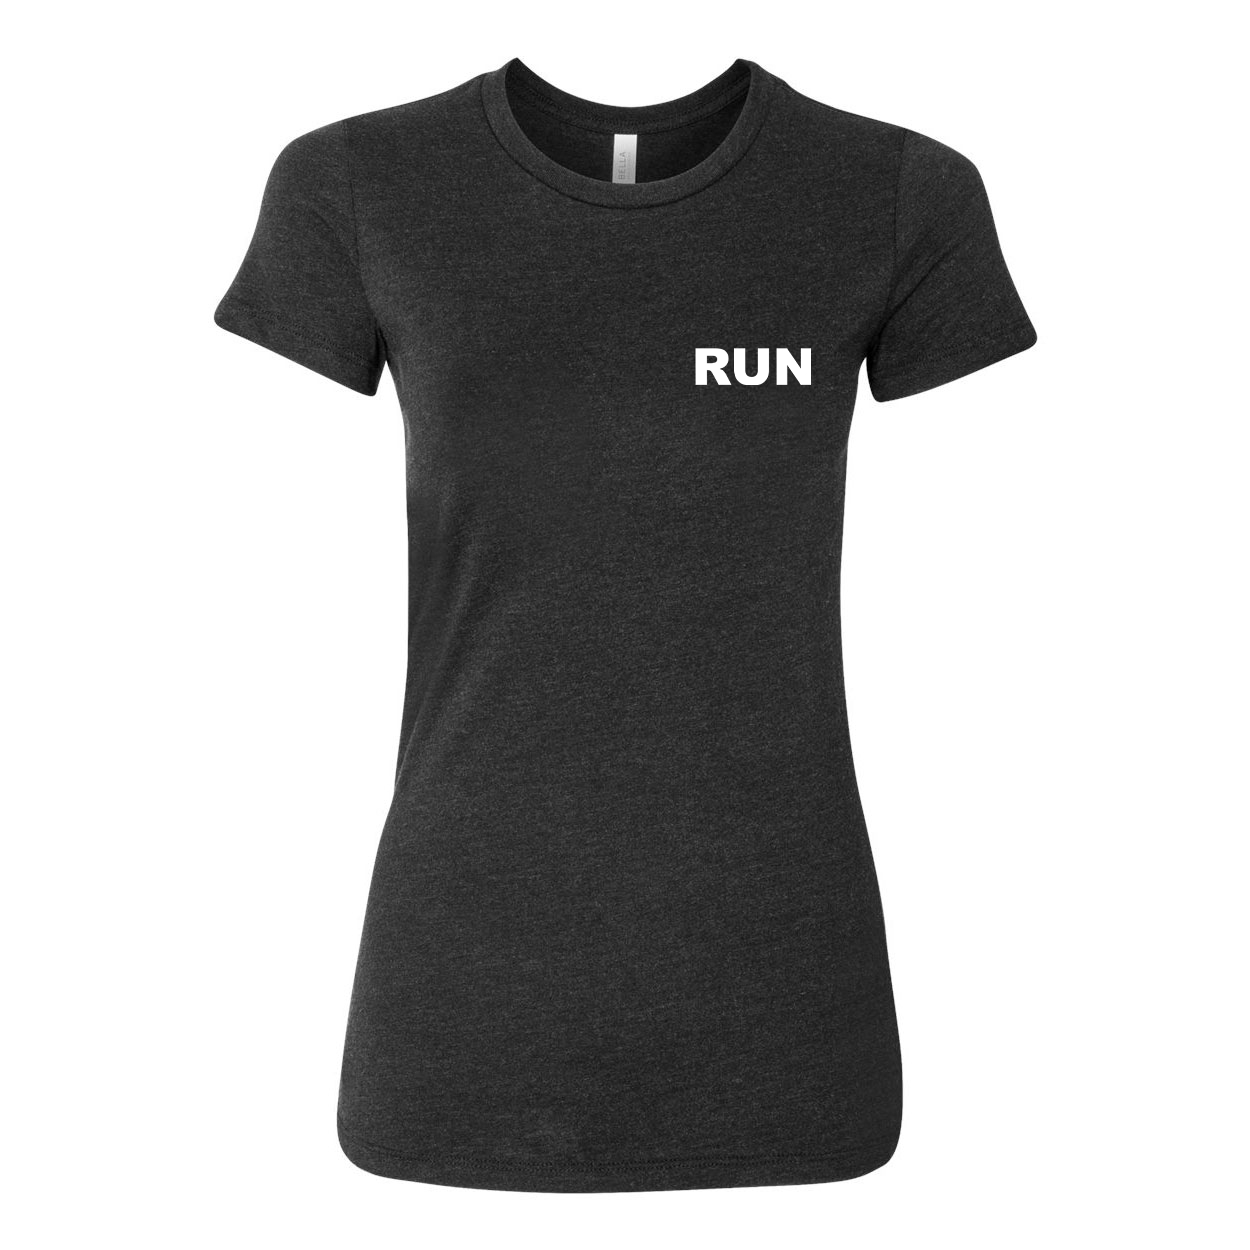 Run Brand Logo Night Out Womens Fitted T-Shirt Dark Heather Gray